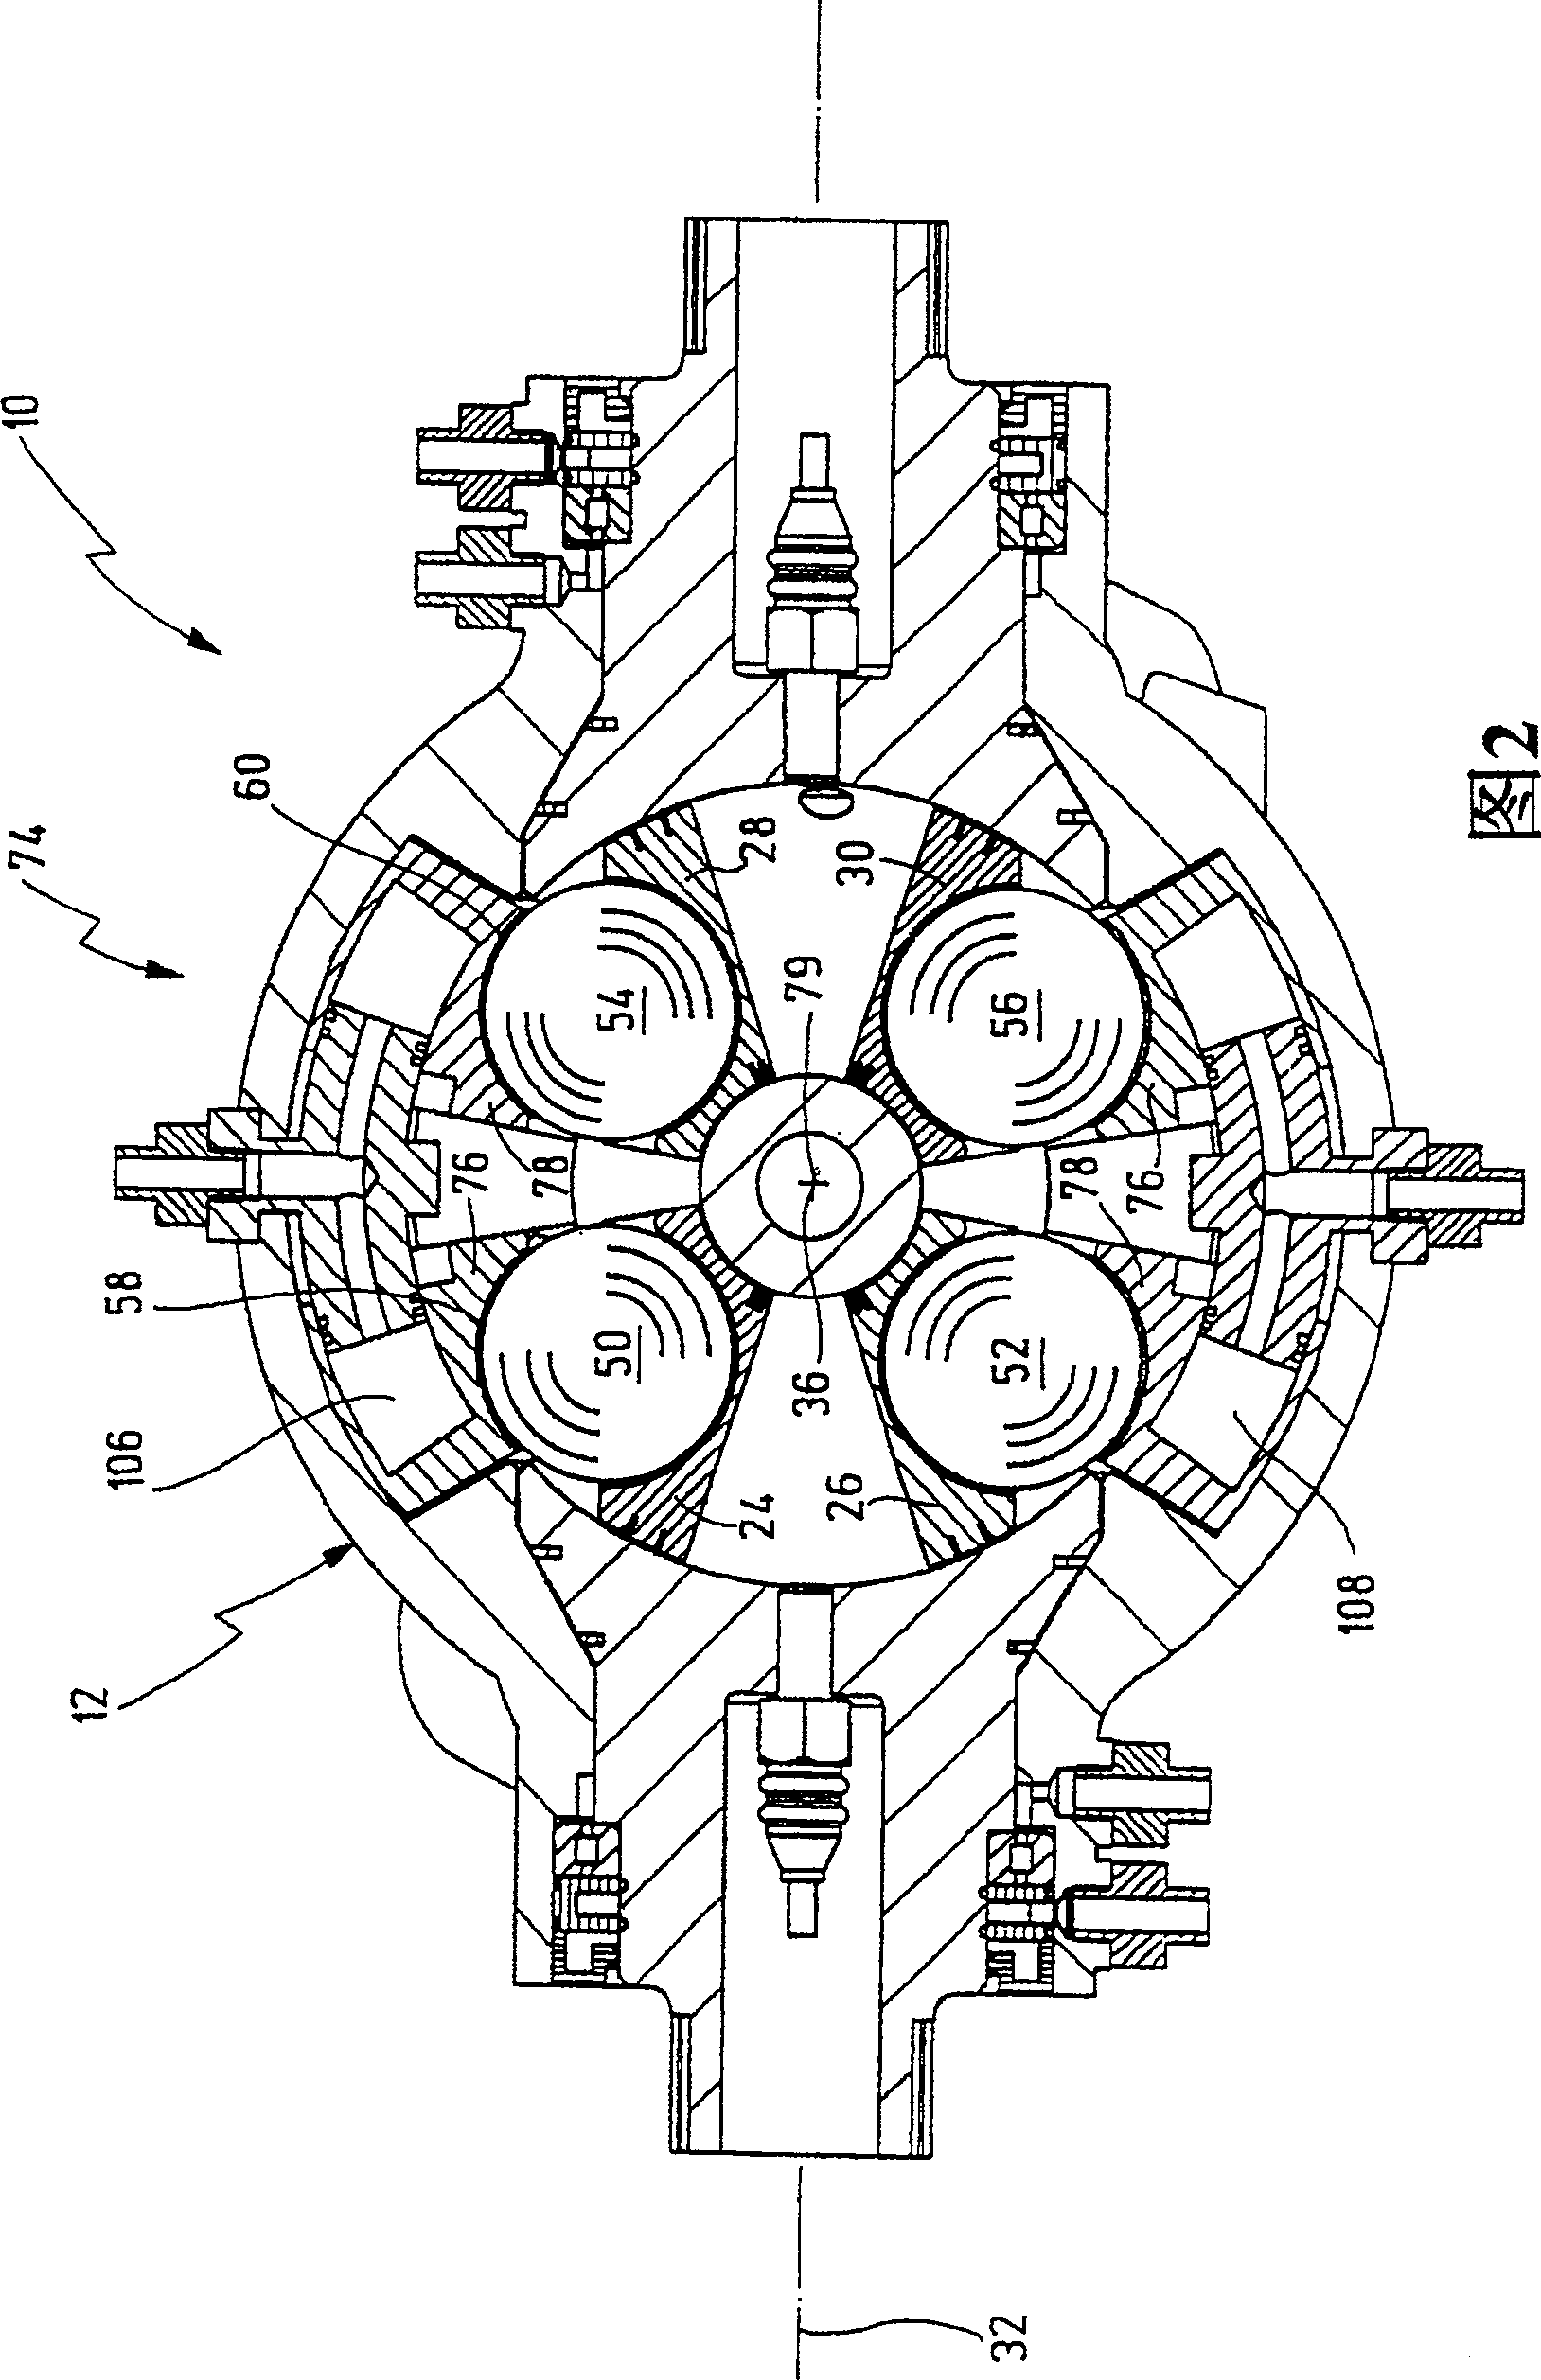 Rotary-piston engine